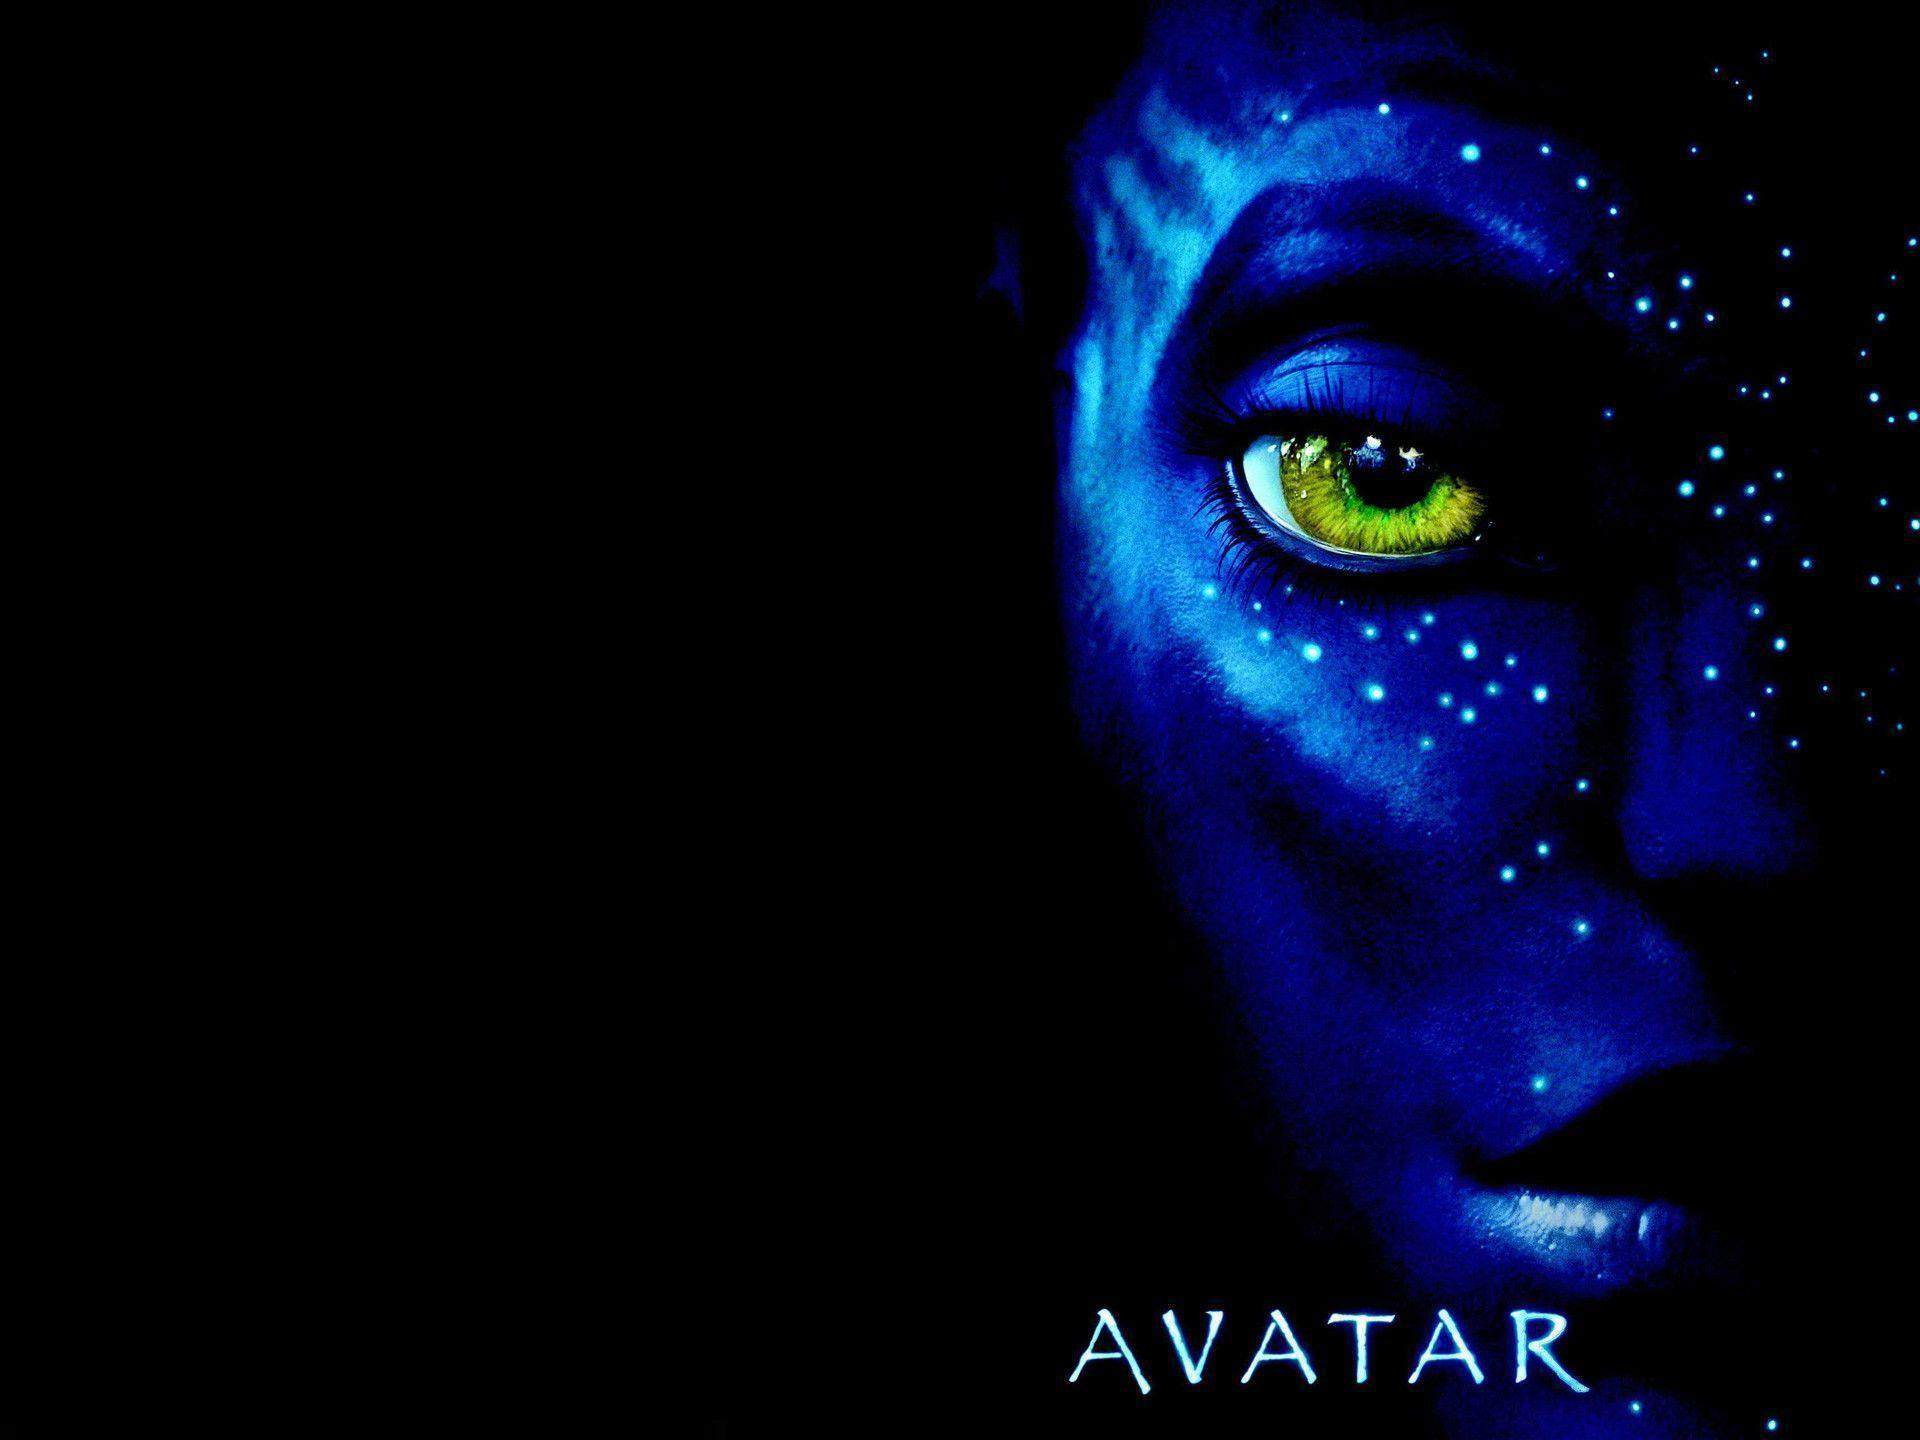 Official Avatar Movie Poster Wallpaper